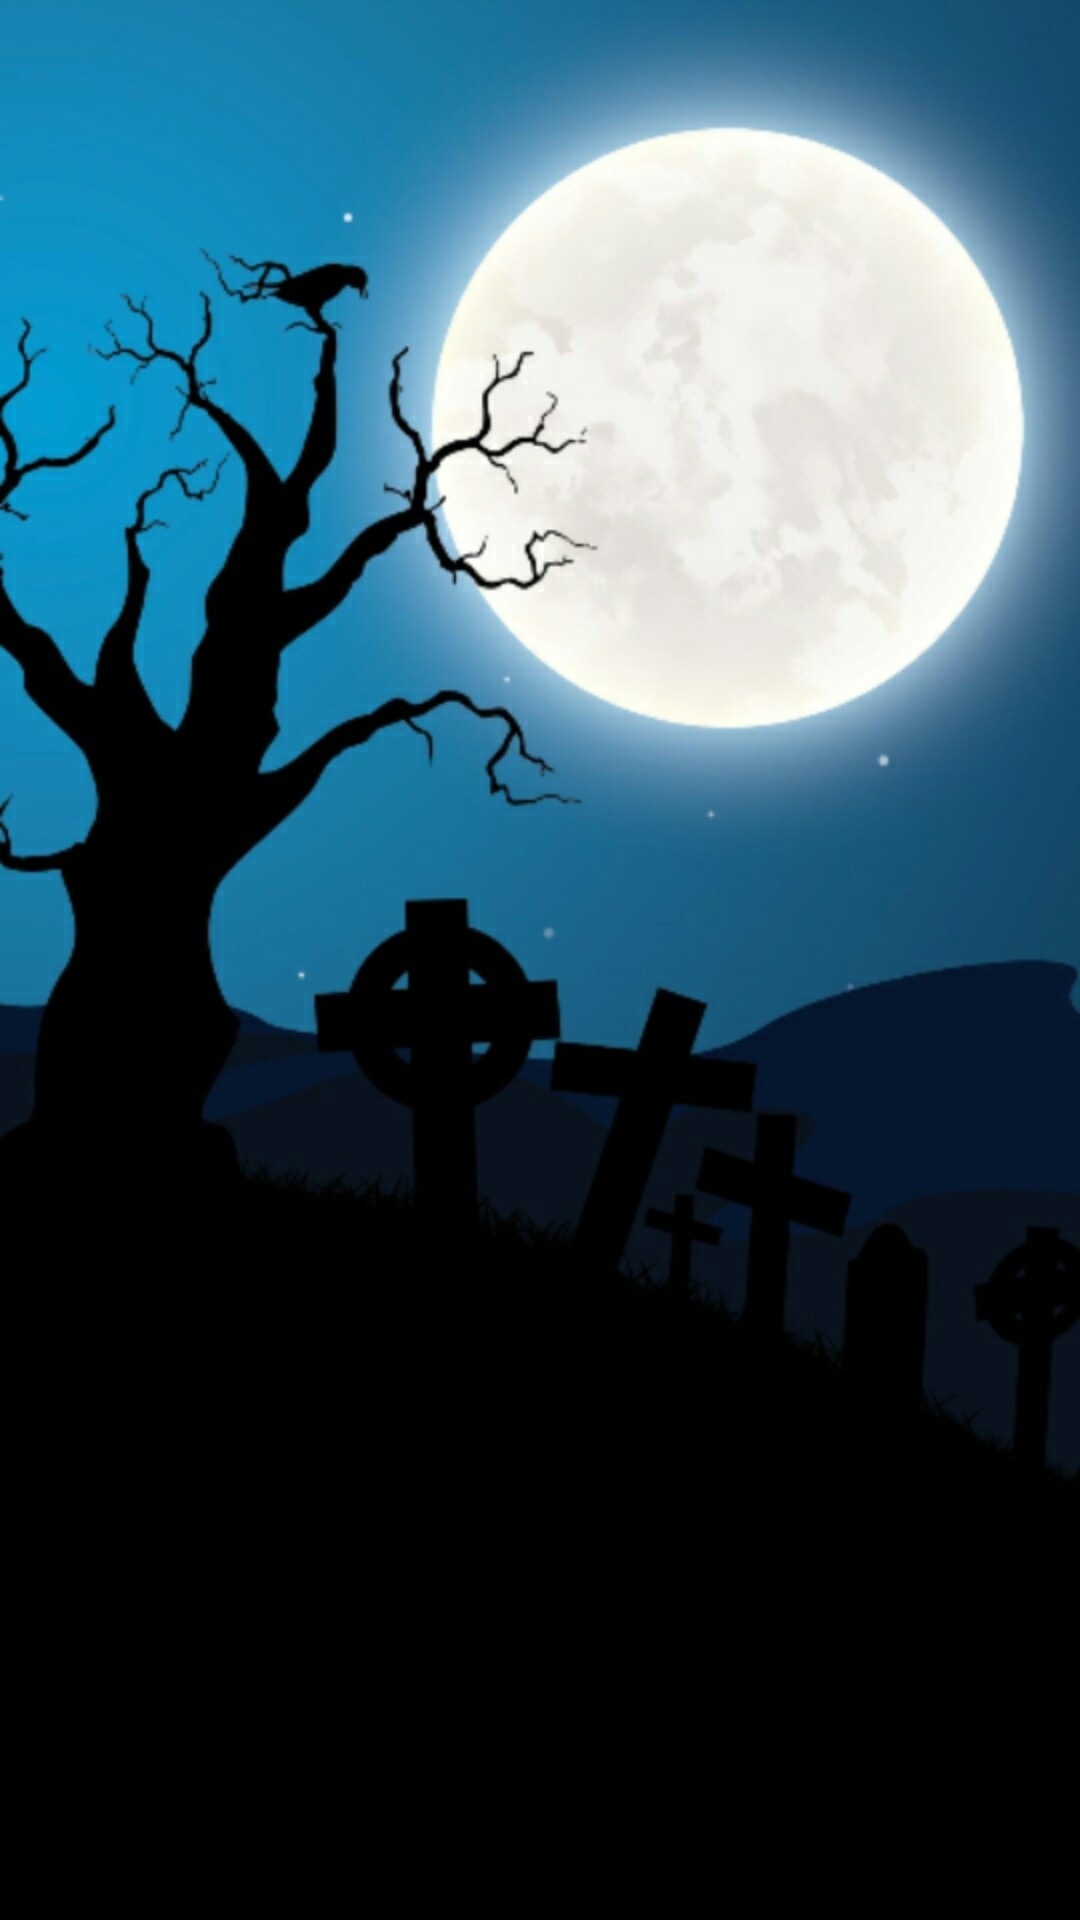 1080x1920 Full moon cellphone wallpaper lock screen, Halloween, midnight, cemetery